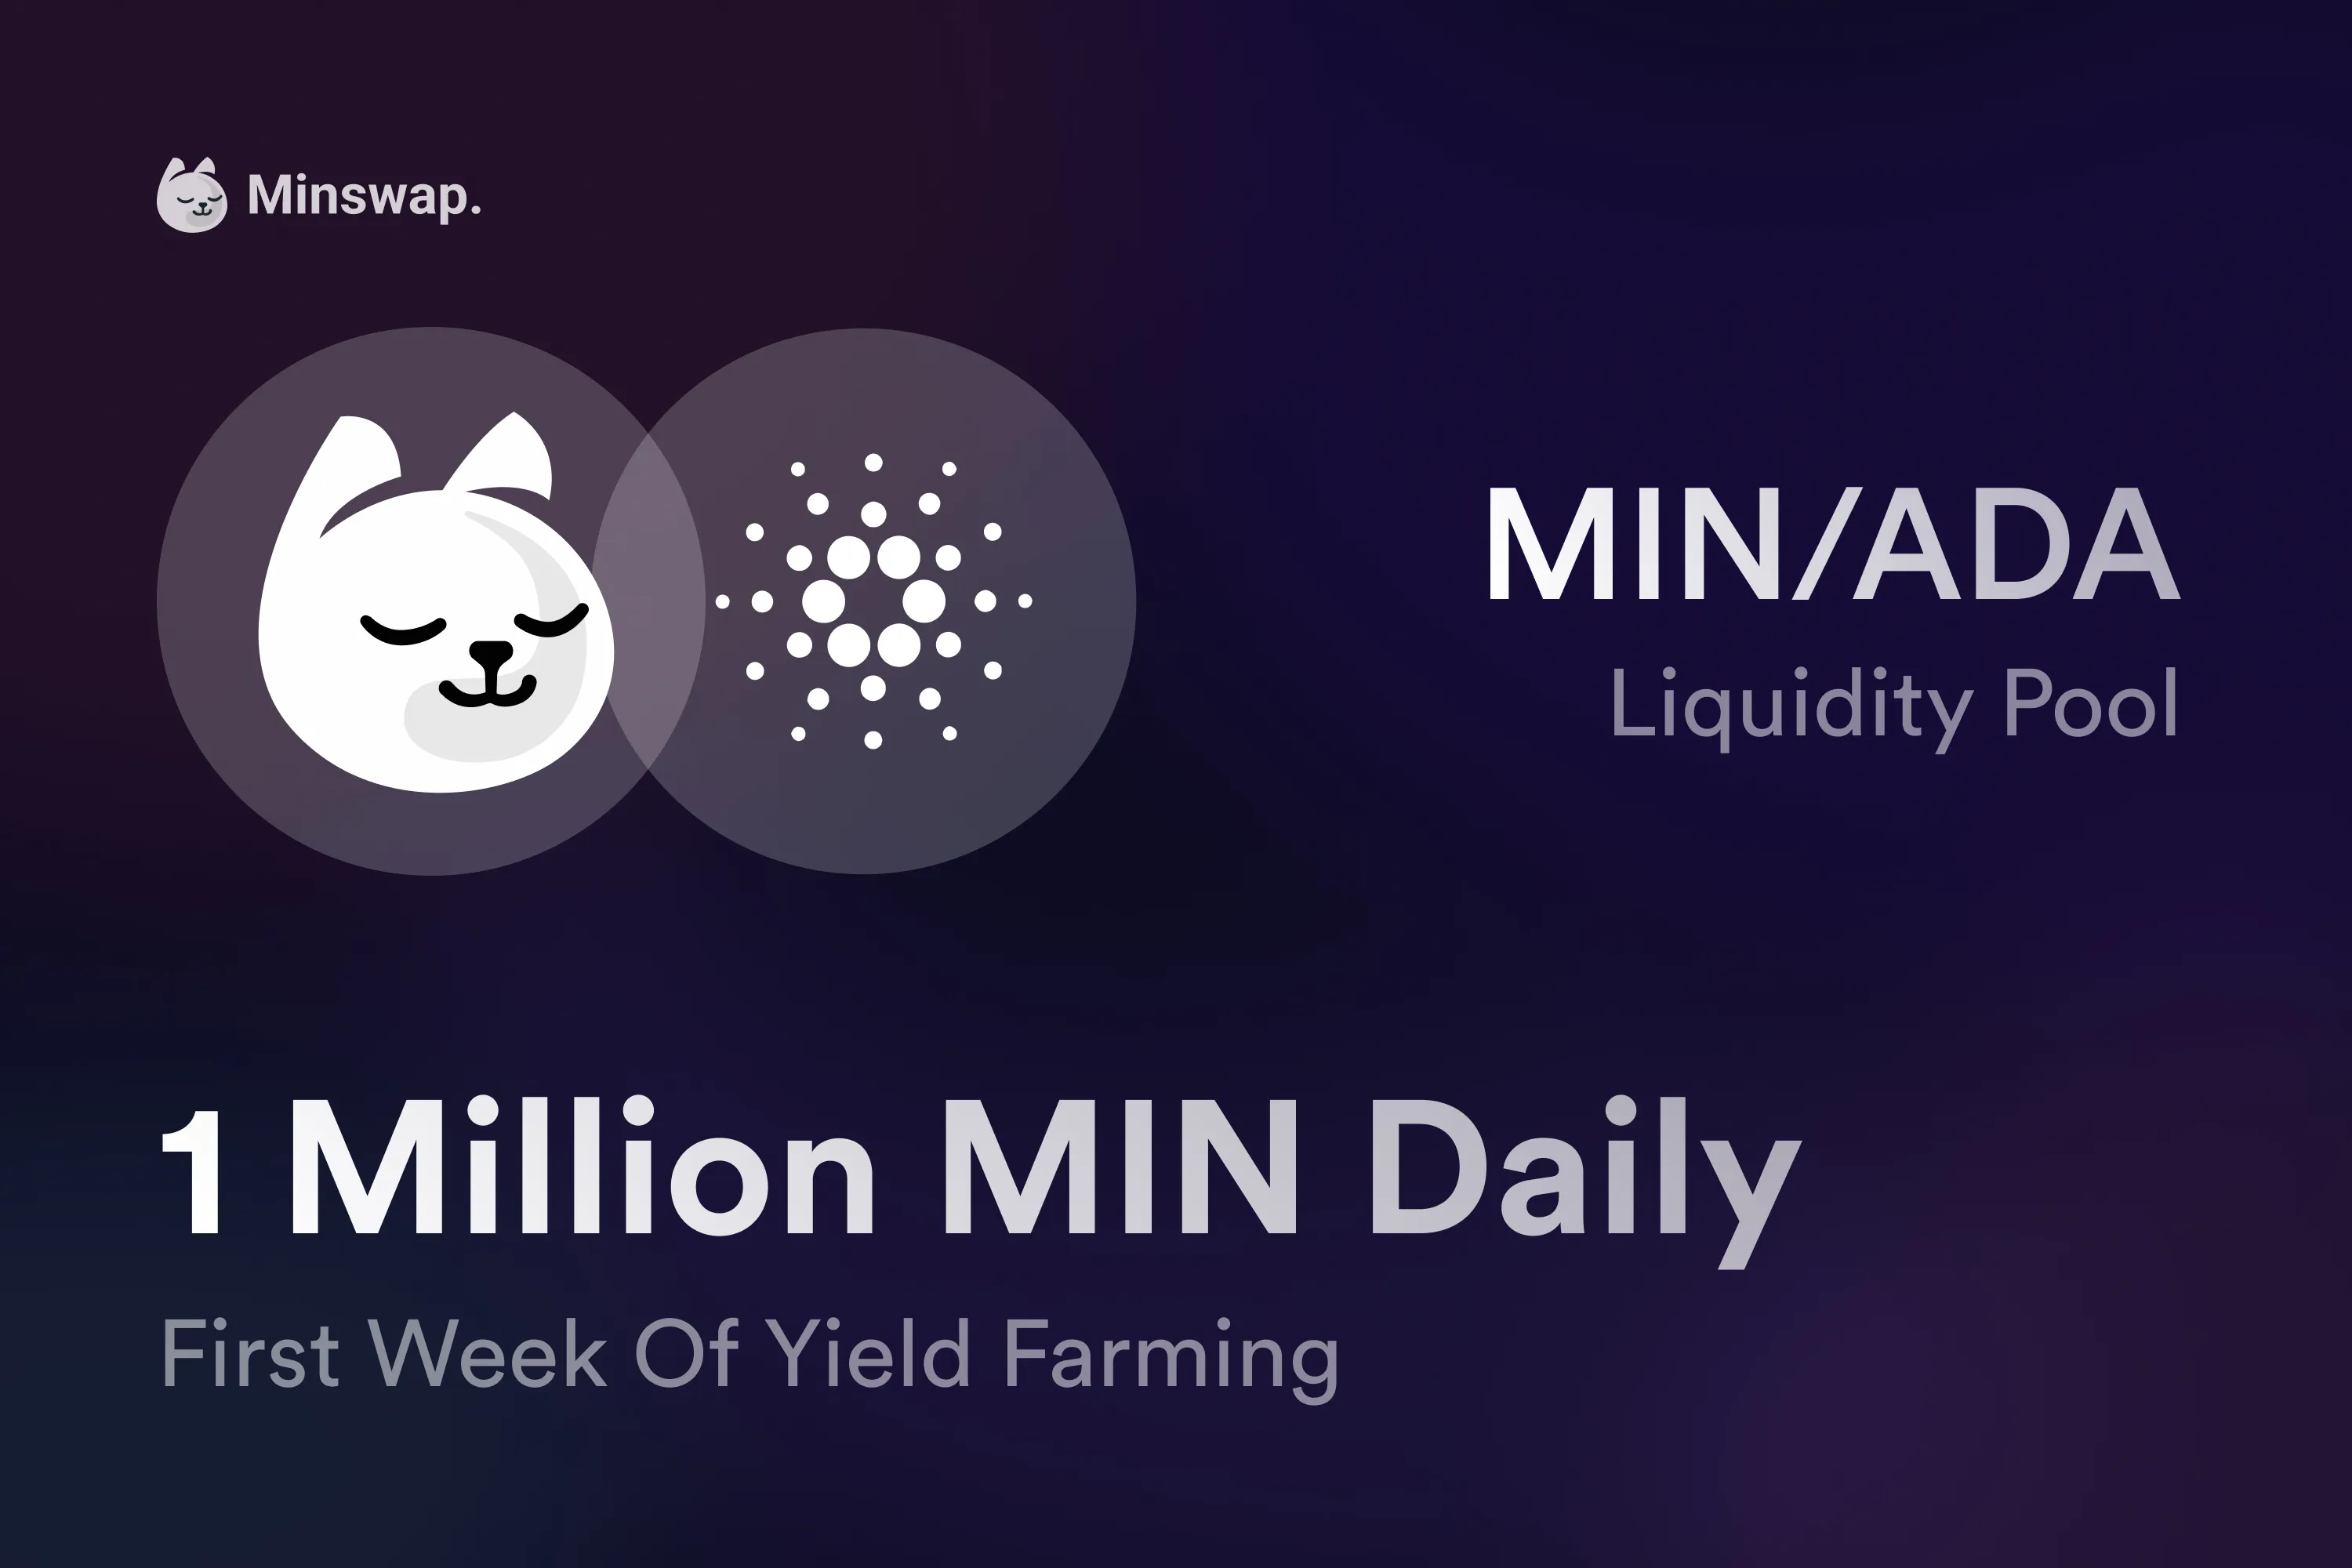 1 million minswap tokens allocation to MIN/ADA yield farming pool